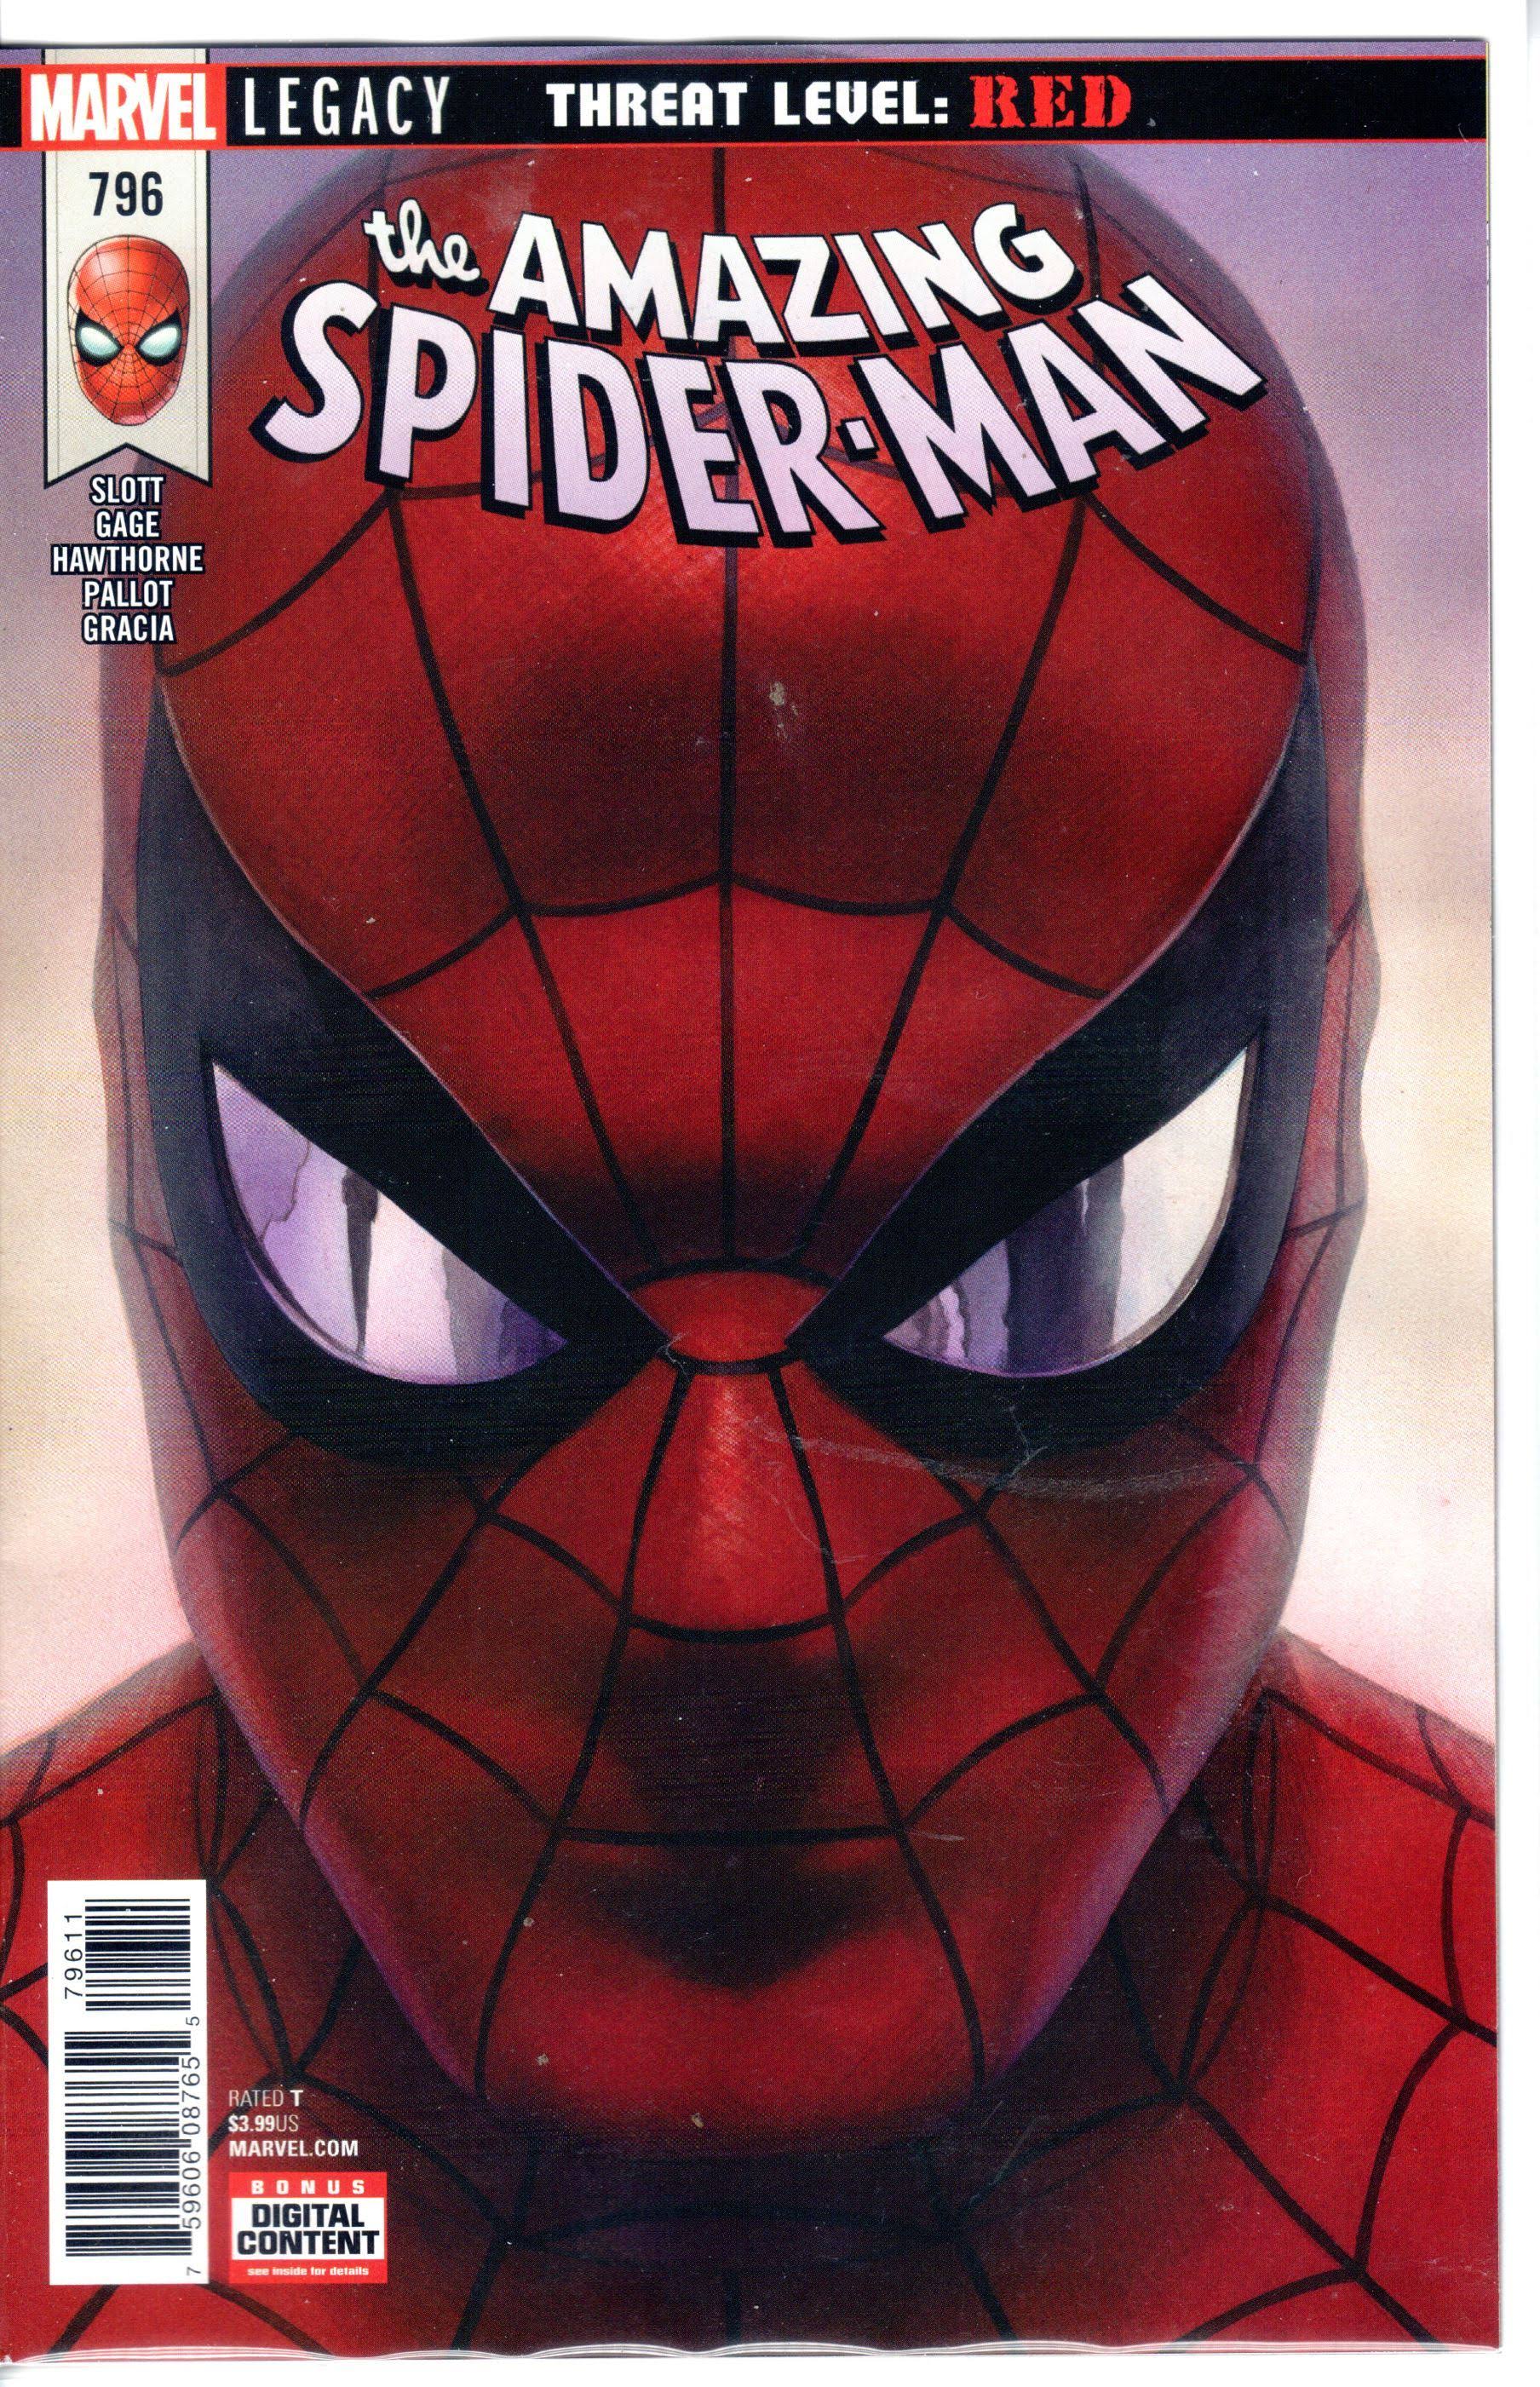 Marvel : The Amazing Spider-Man #789 - Marvel Comics